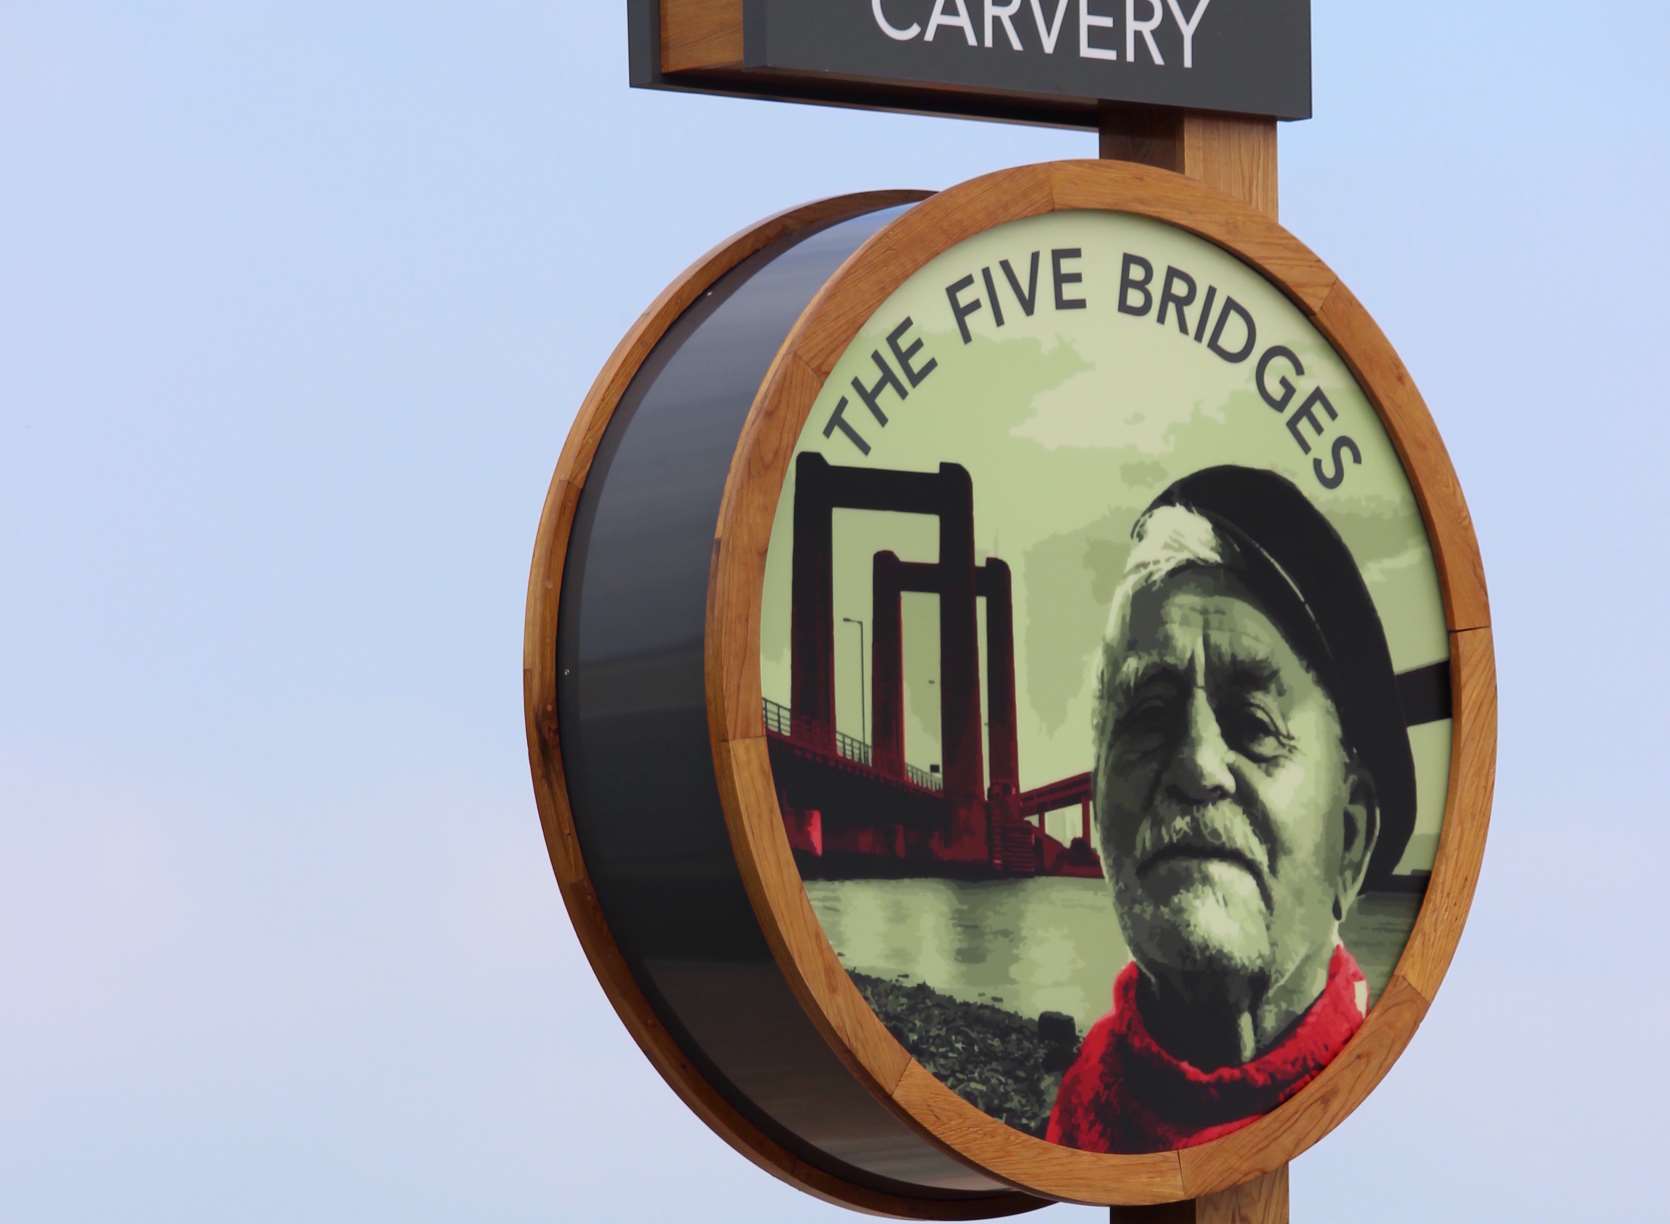 The Five Bridges pub sign that features John Cross's grandfather, Dick Evenden